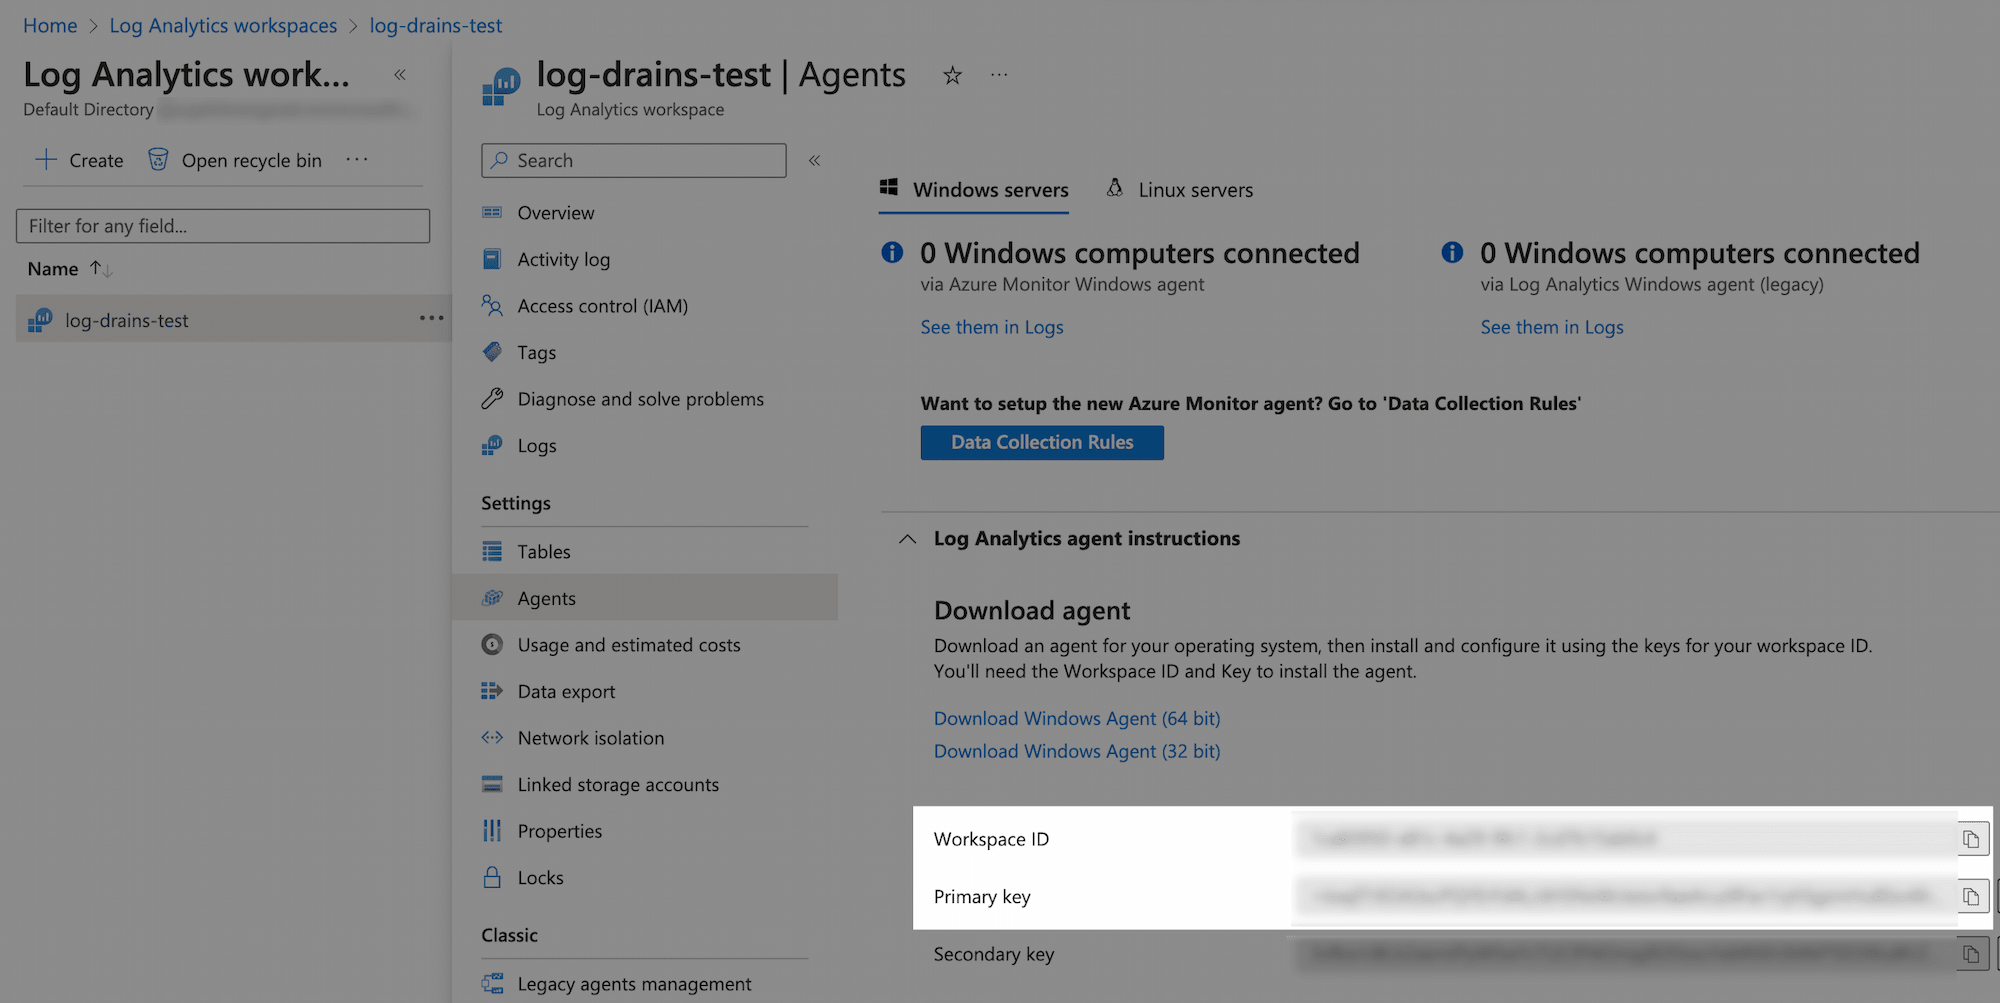 Azure analytics workspace screenshot highlighting the Workspace ID and Primary Key fields under Log Analytics Agent Instructions.